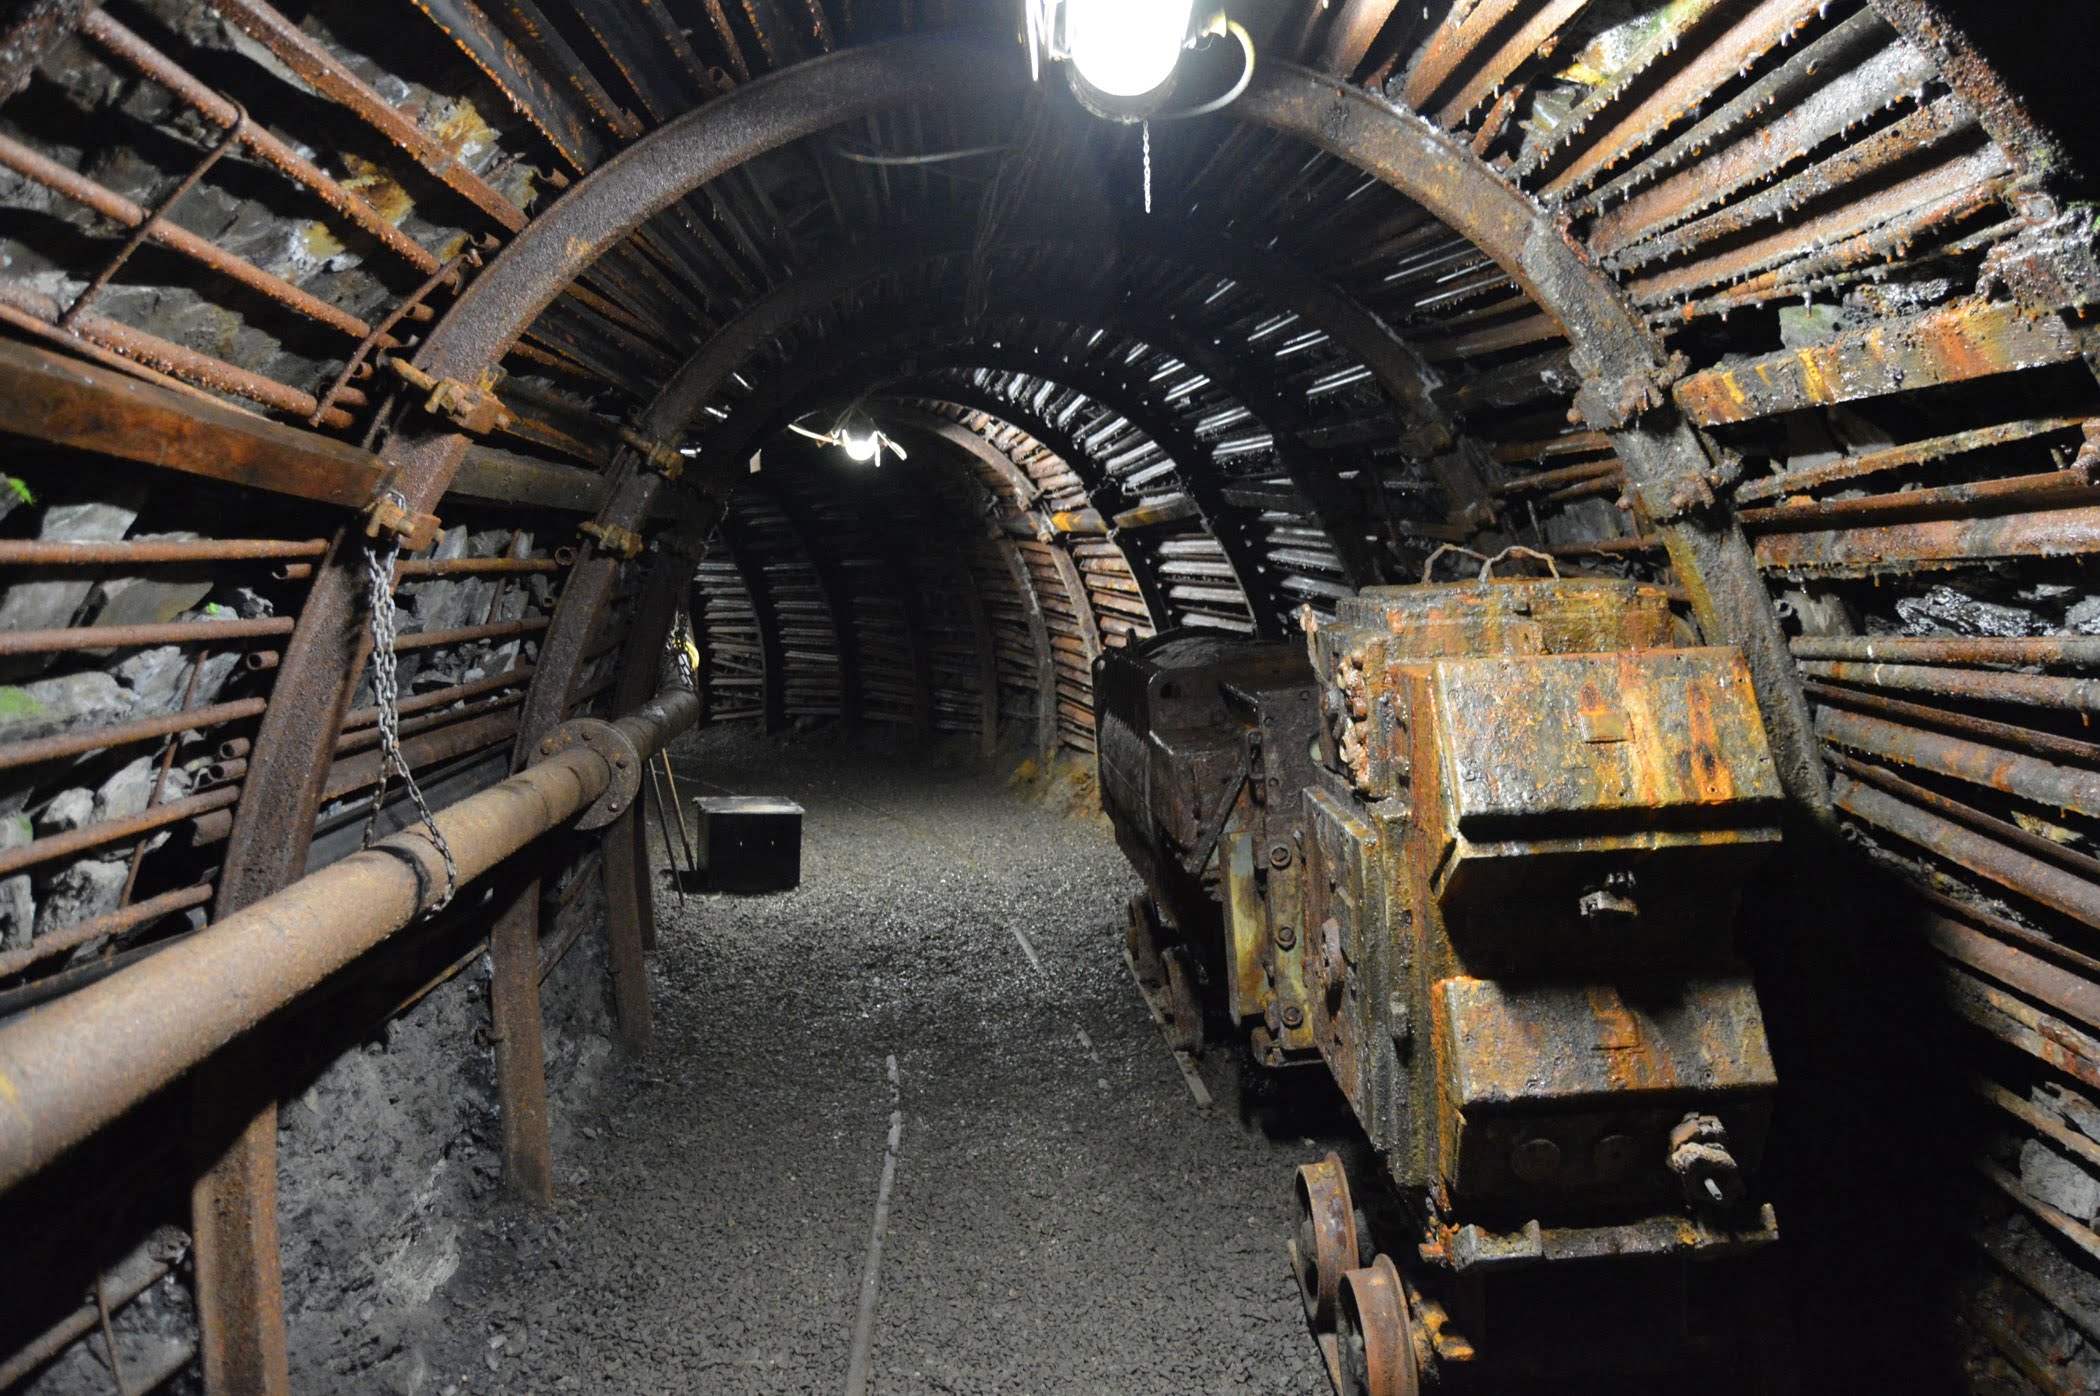 Gallerie de la mine de Blegny